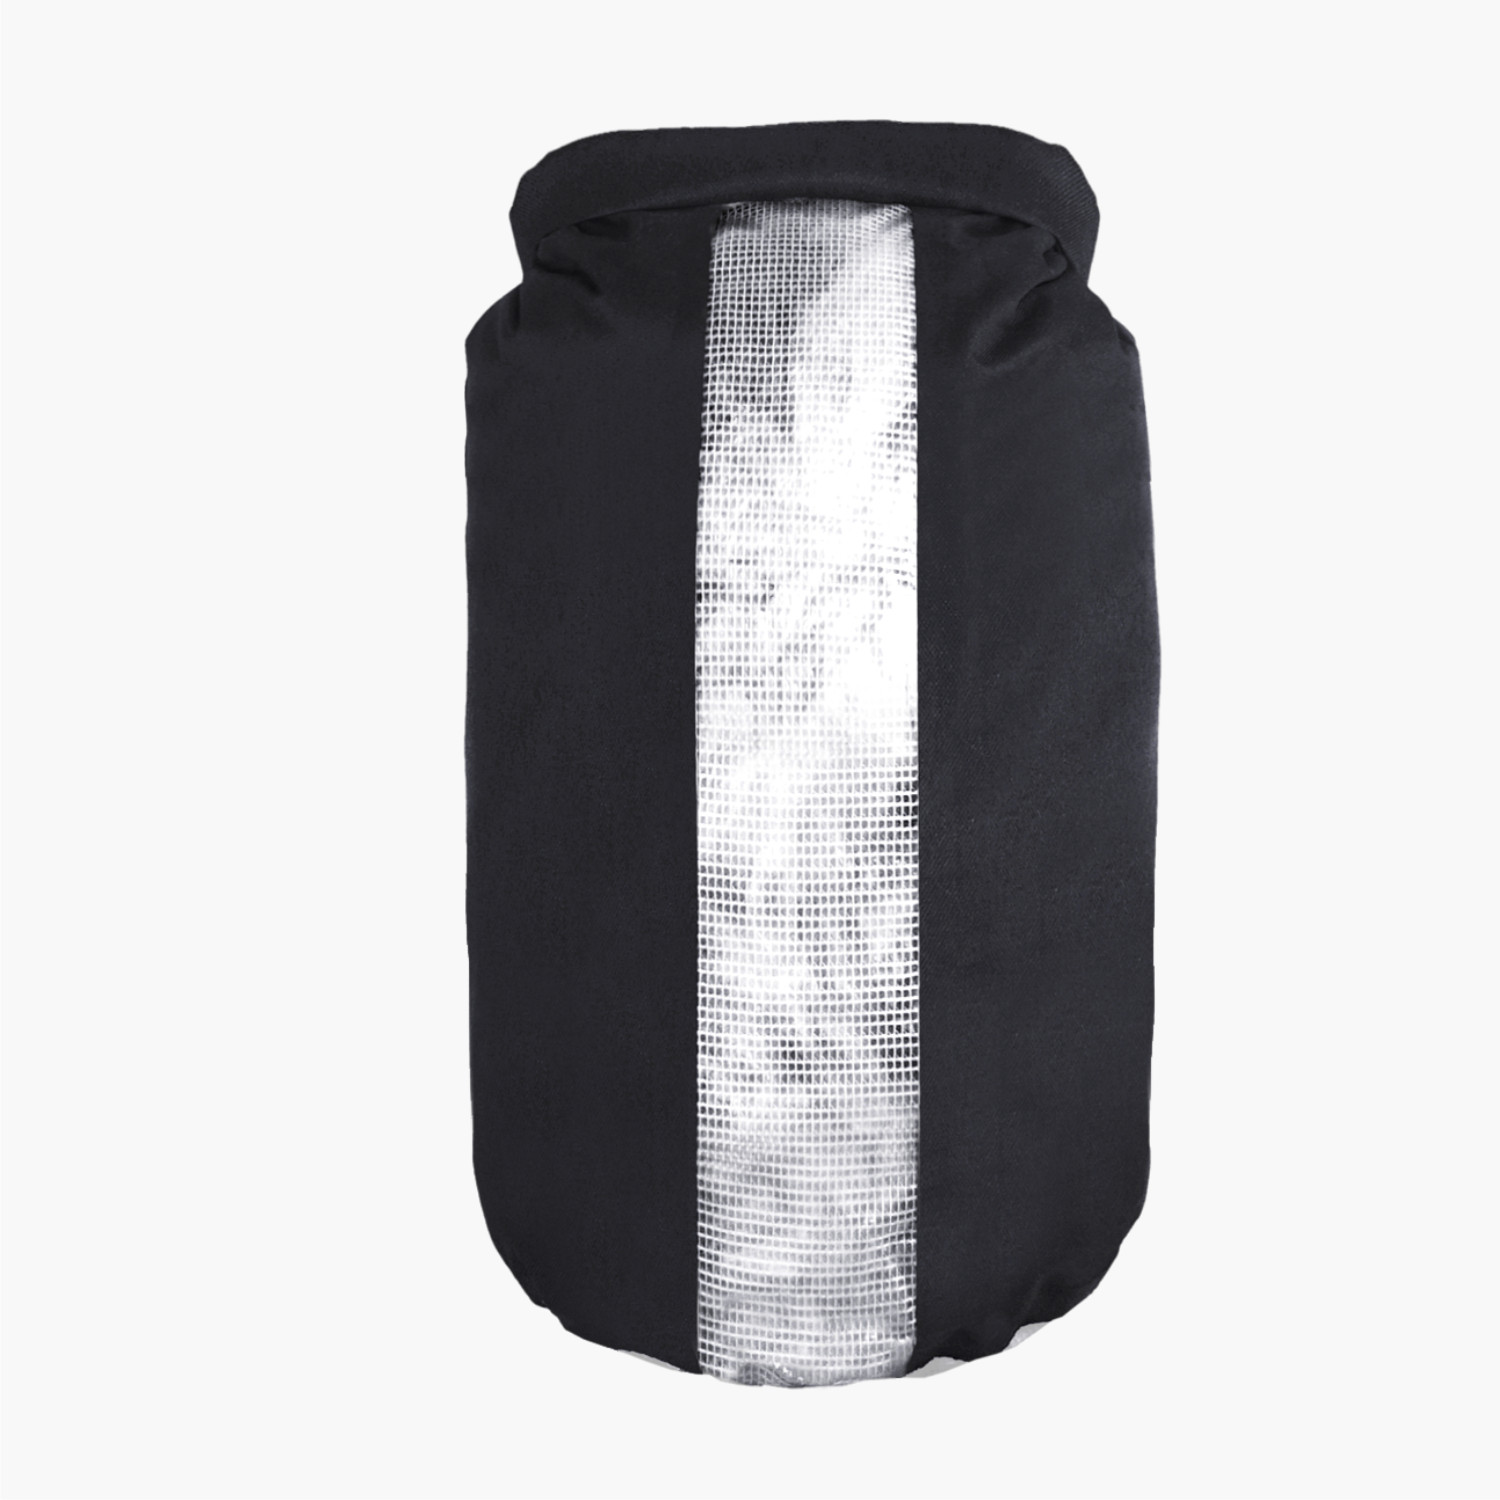 Lomo 5L Dry Bag - Black with Window